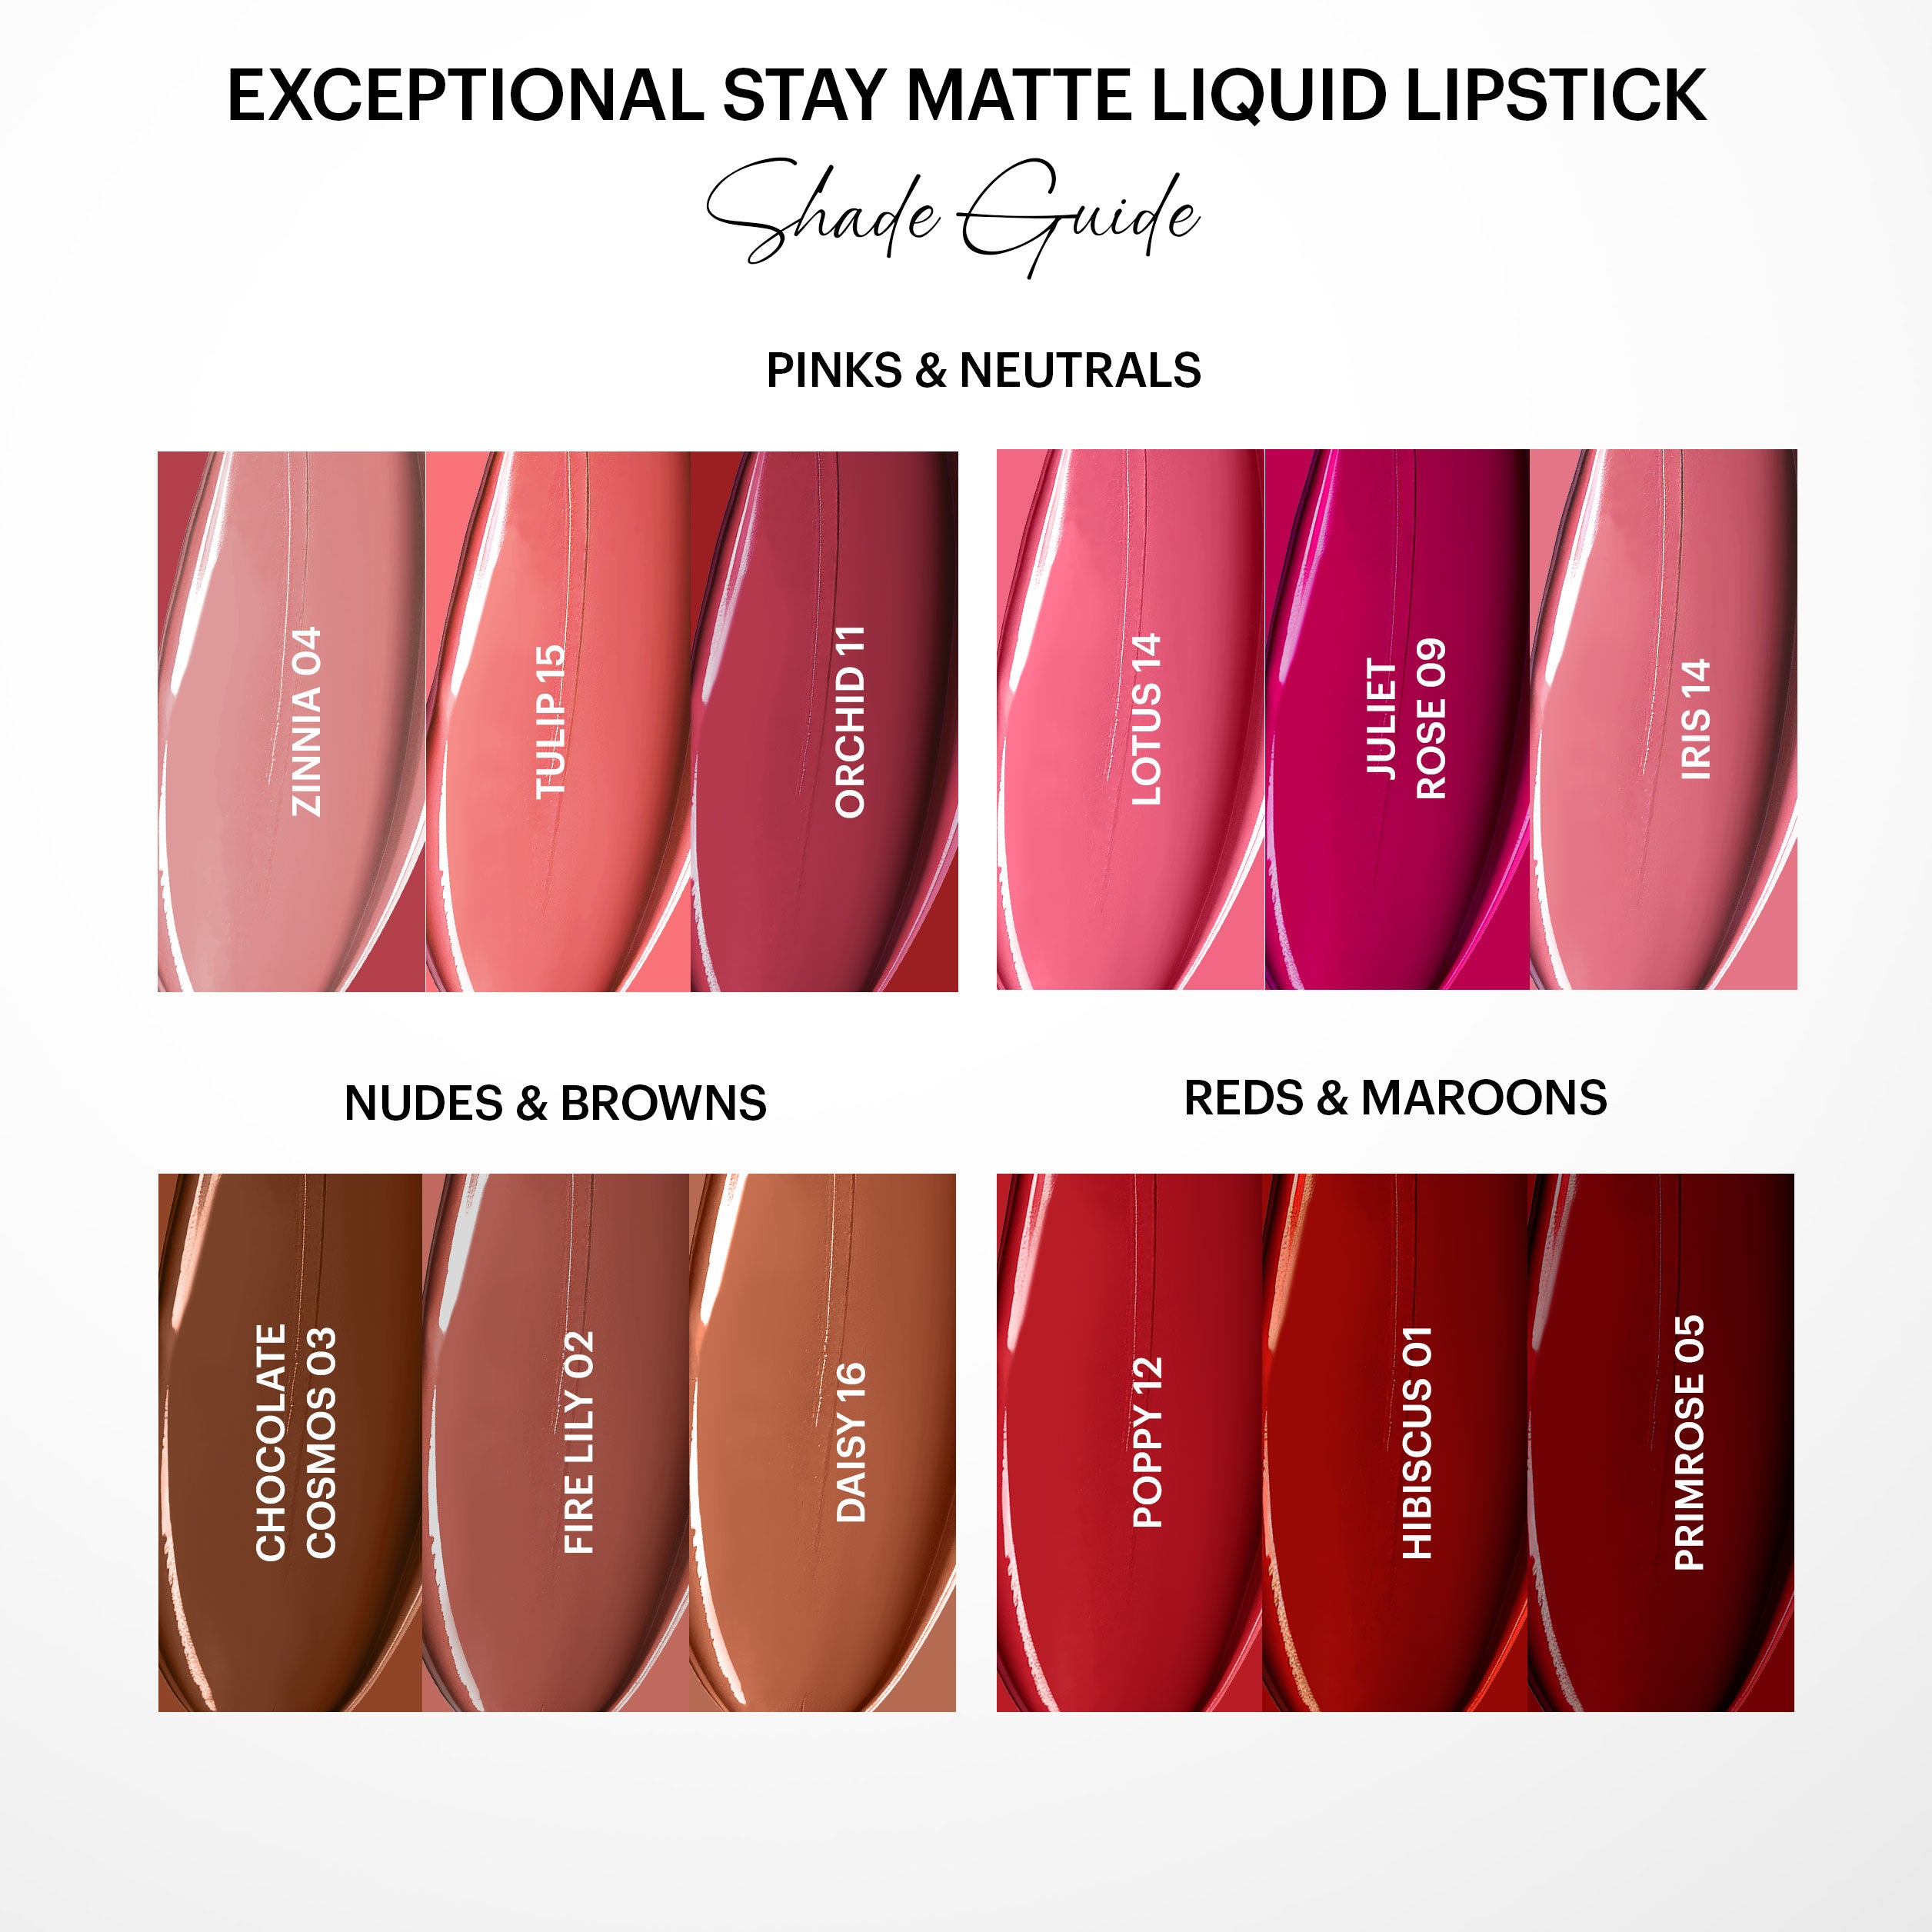 Exceptional Stay Matte Liquid Lipstick  Shade: Iris 14